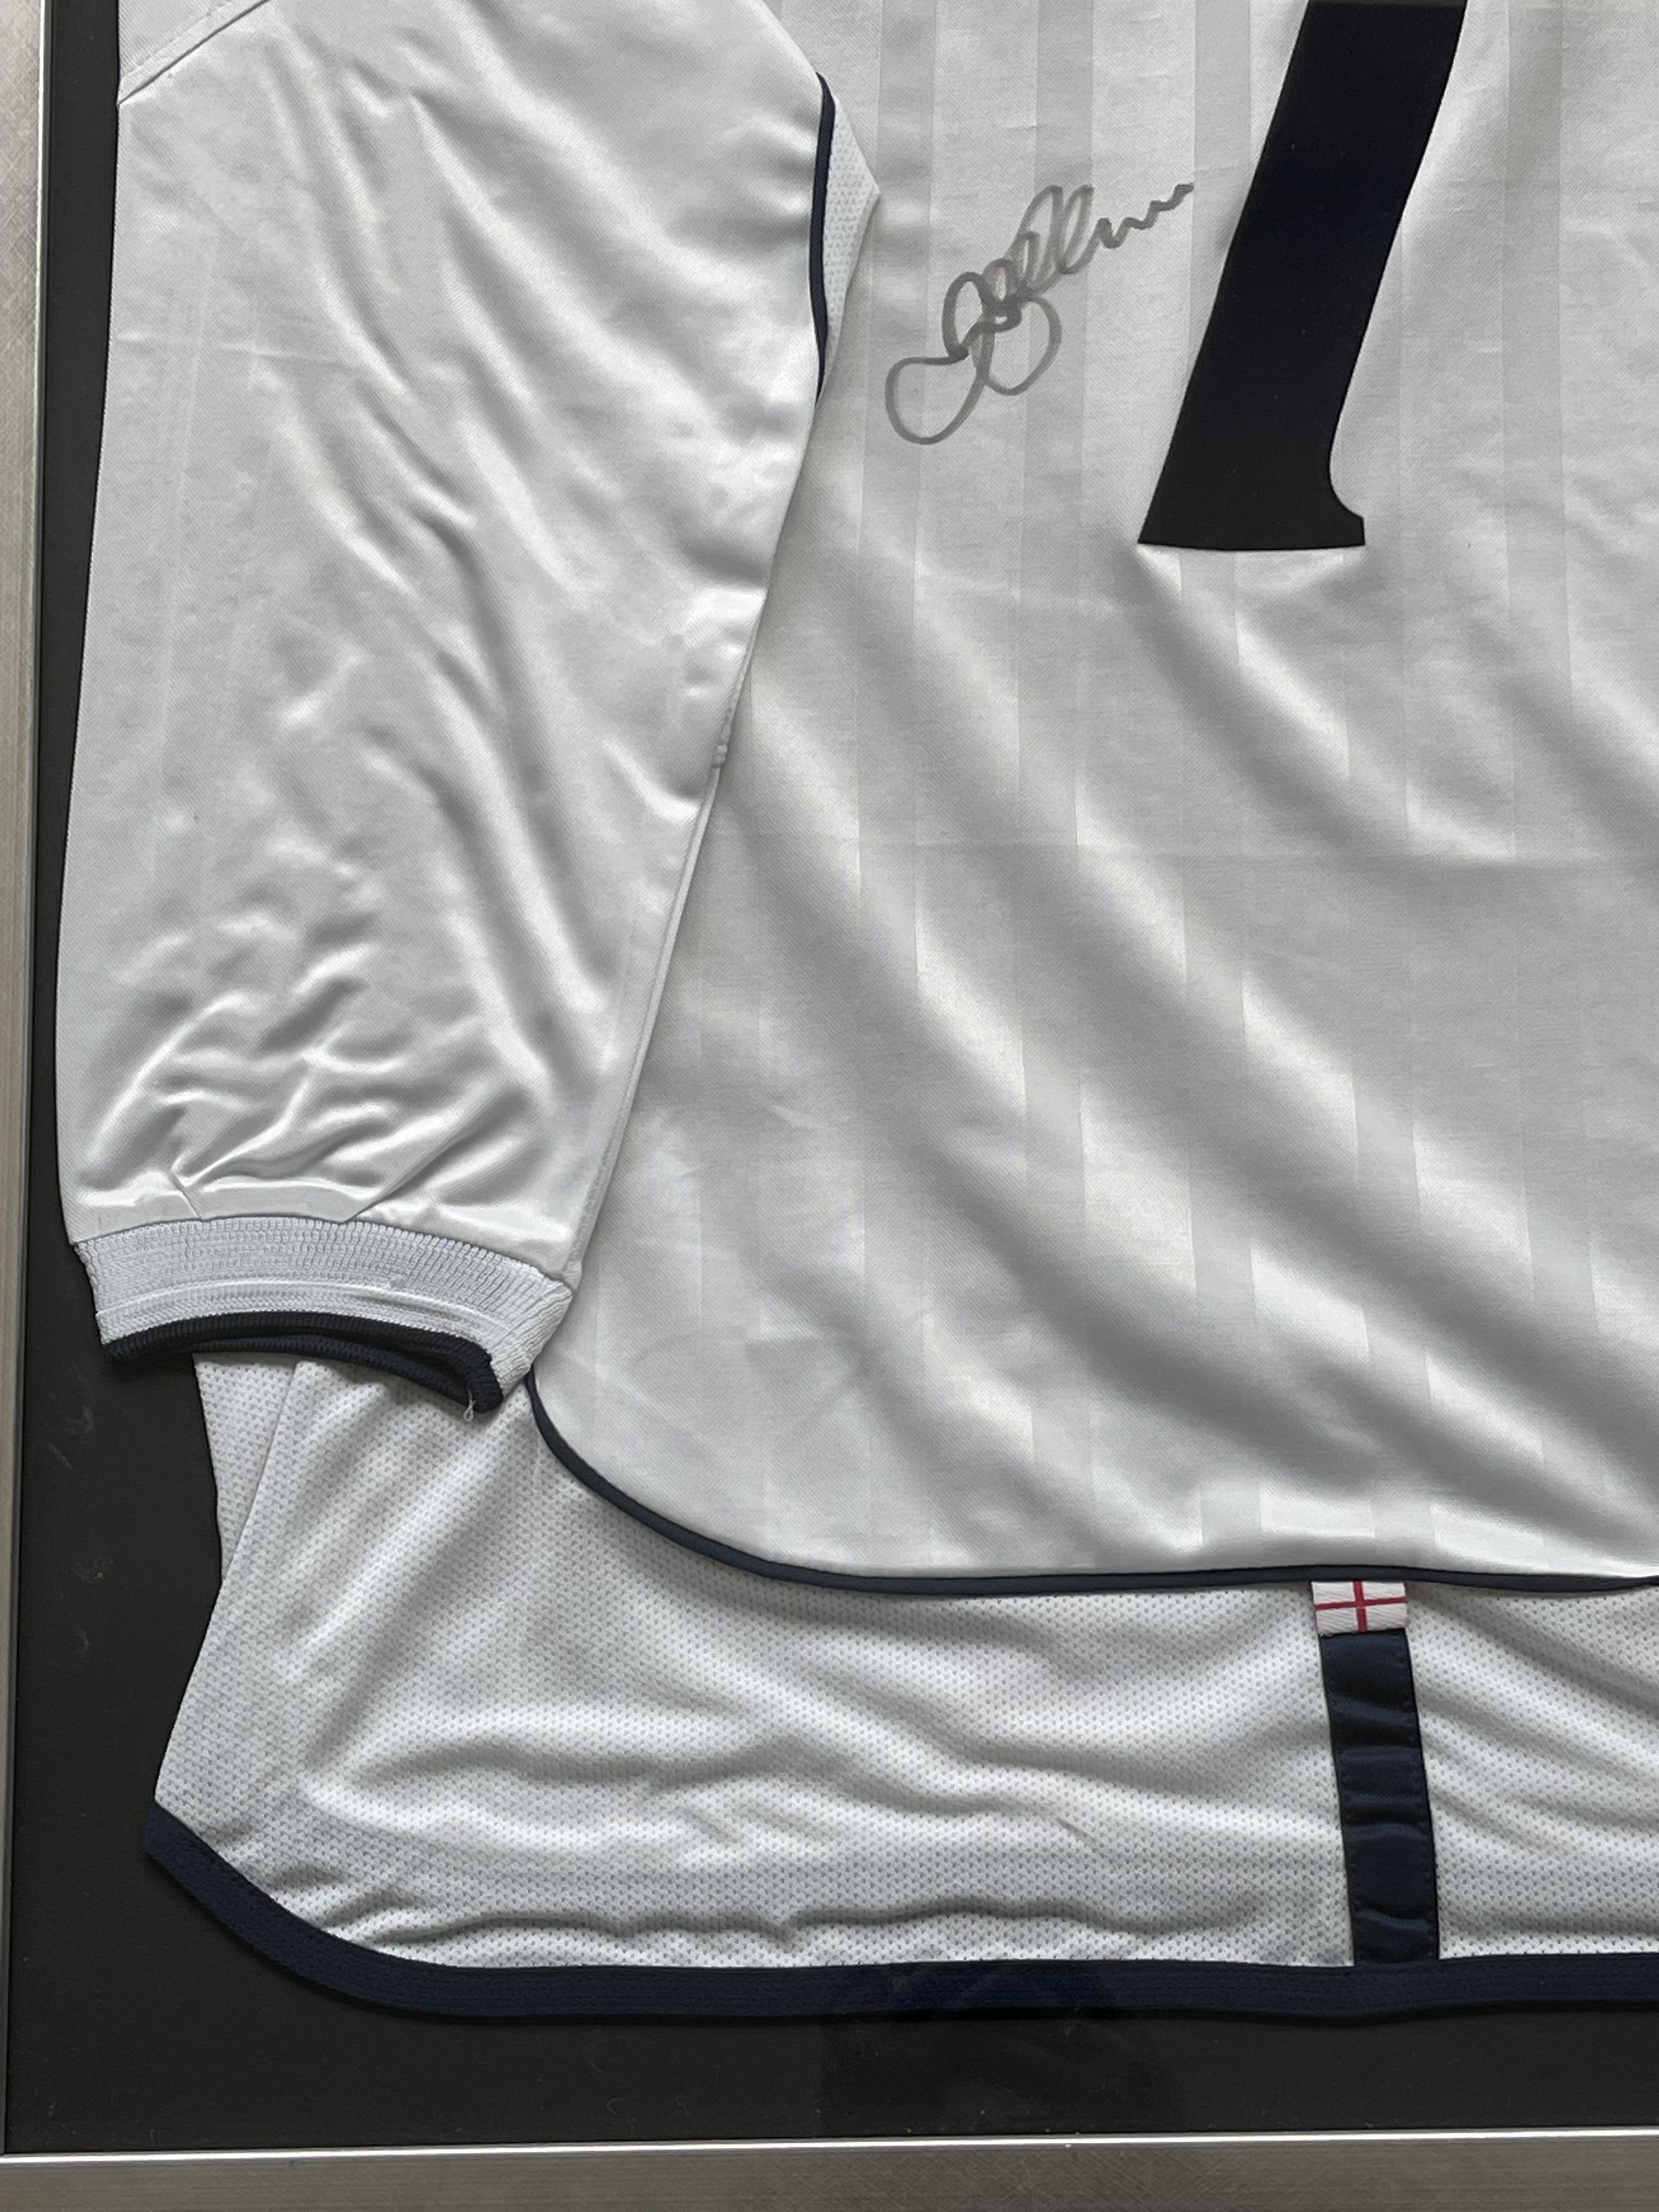 David Beckham - Framed Signed England Shirt with C - Image 5 of 13